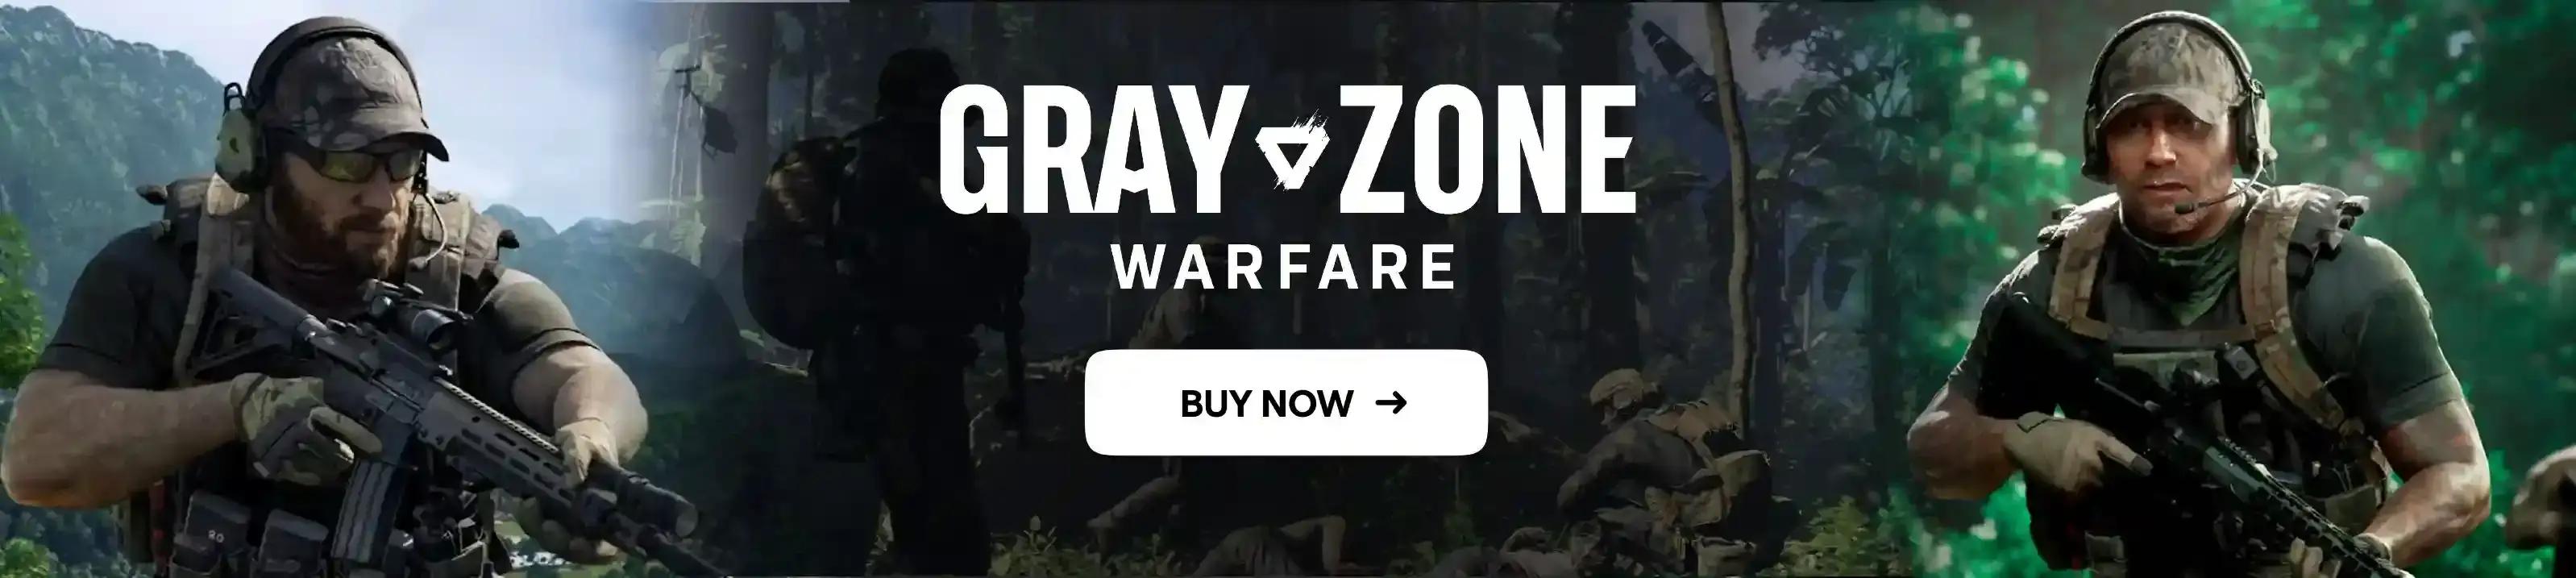 Grayzone warfare mobile